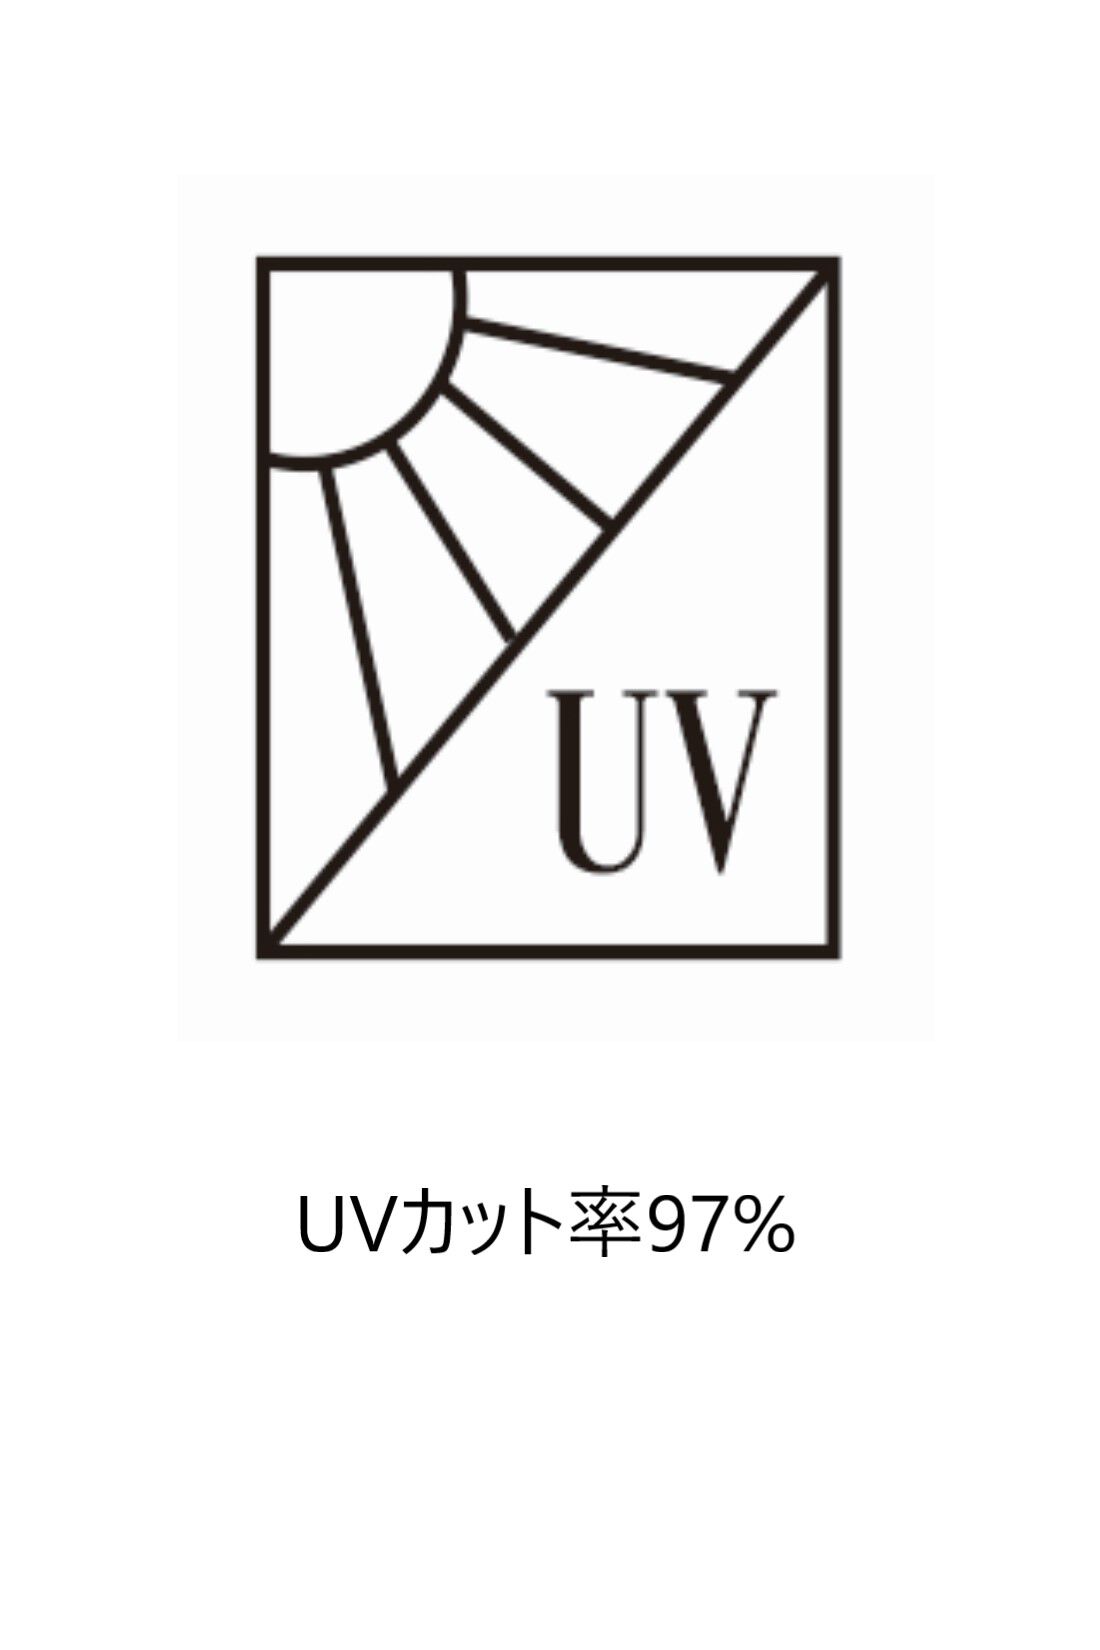 OSYAIRO|OSYAIRO　UVカットのキレイカラーマスク〈オレンジ〉|UVカット率97%